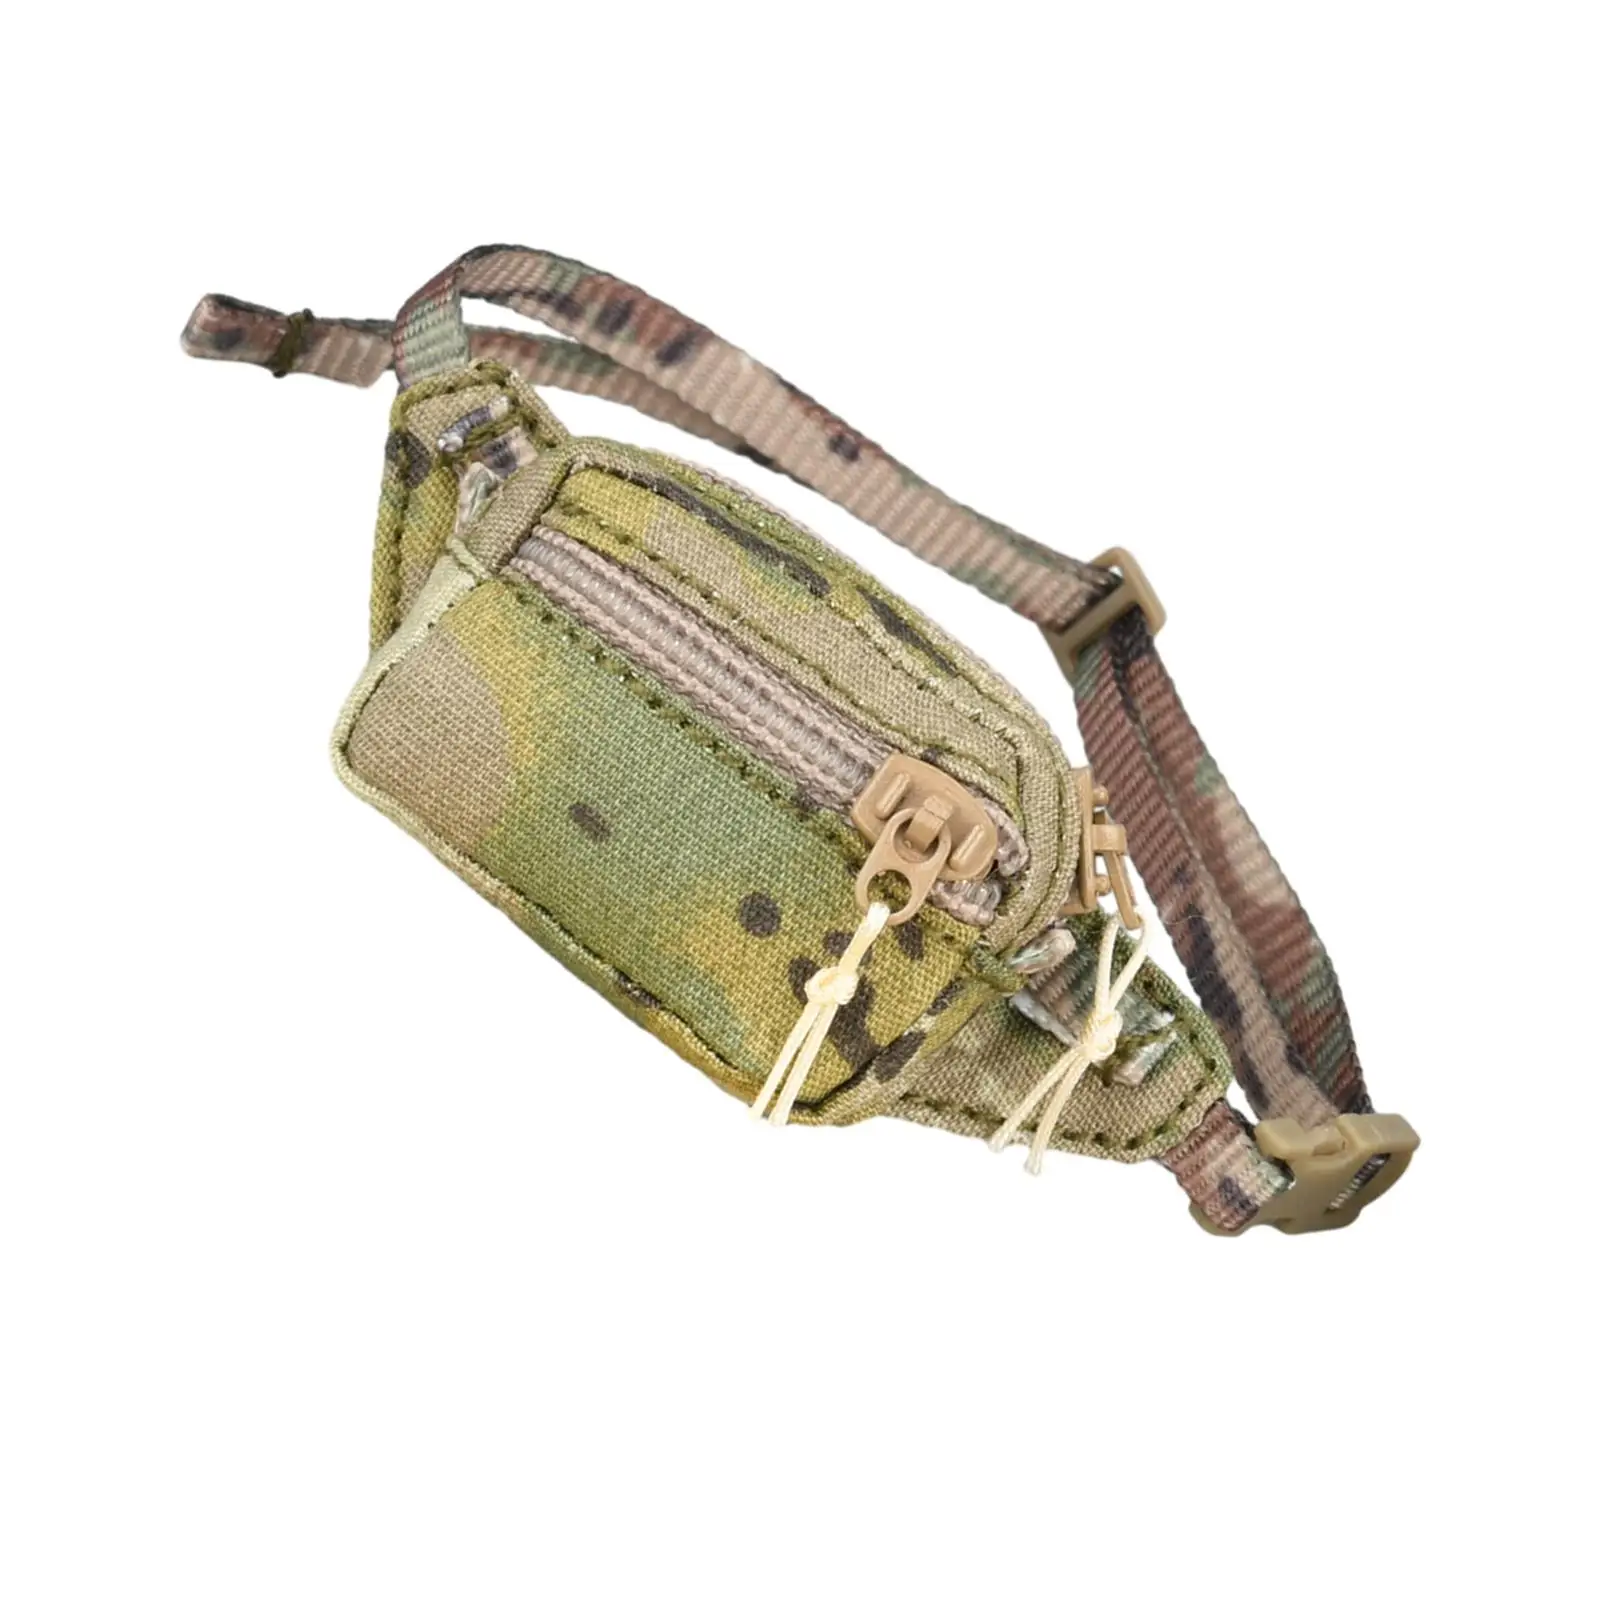 1/6 Soldier Waist Bag Garden Tool Classic Miniature Waist Storage Bag Decoration Accessory for 12`` Action Figures Decoration